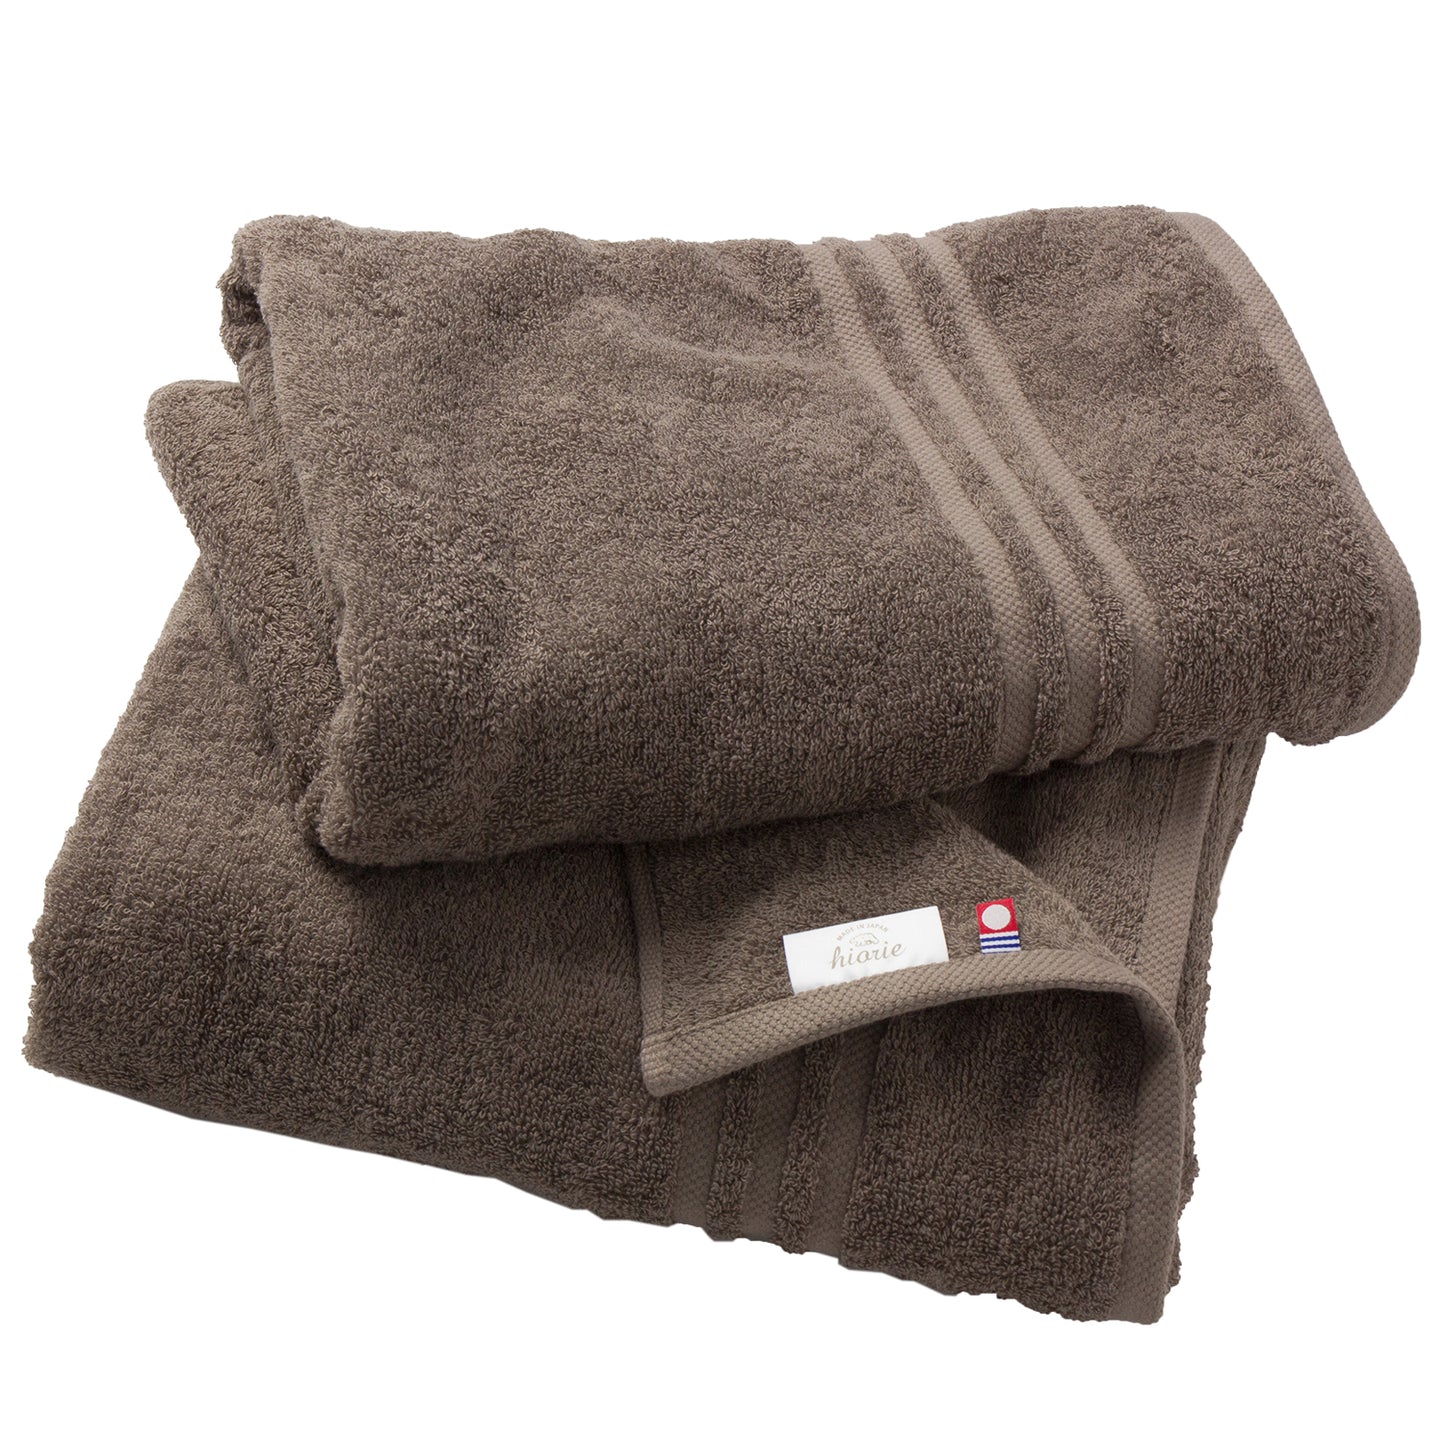 Hiorie Imabari Towel Soft Hotel's flauschiges Badetuch 2 Blatt 100 % Baumwolle Japan